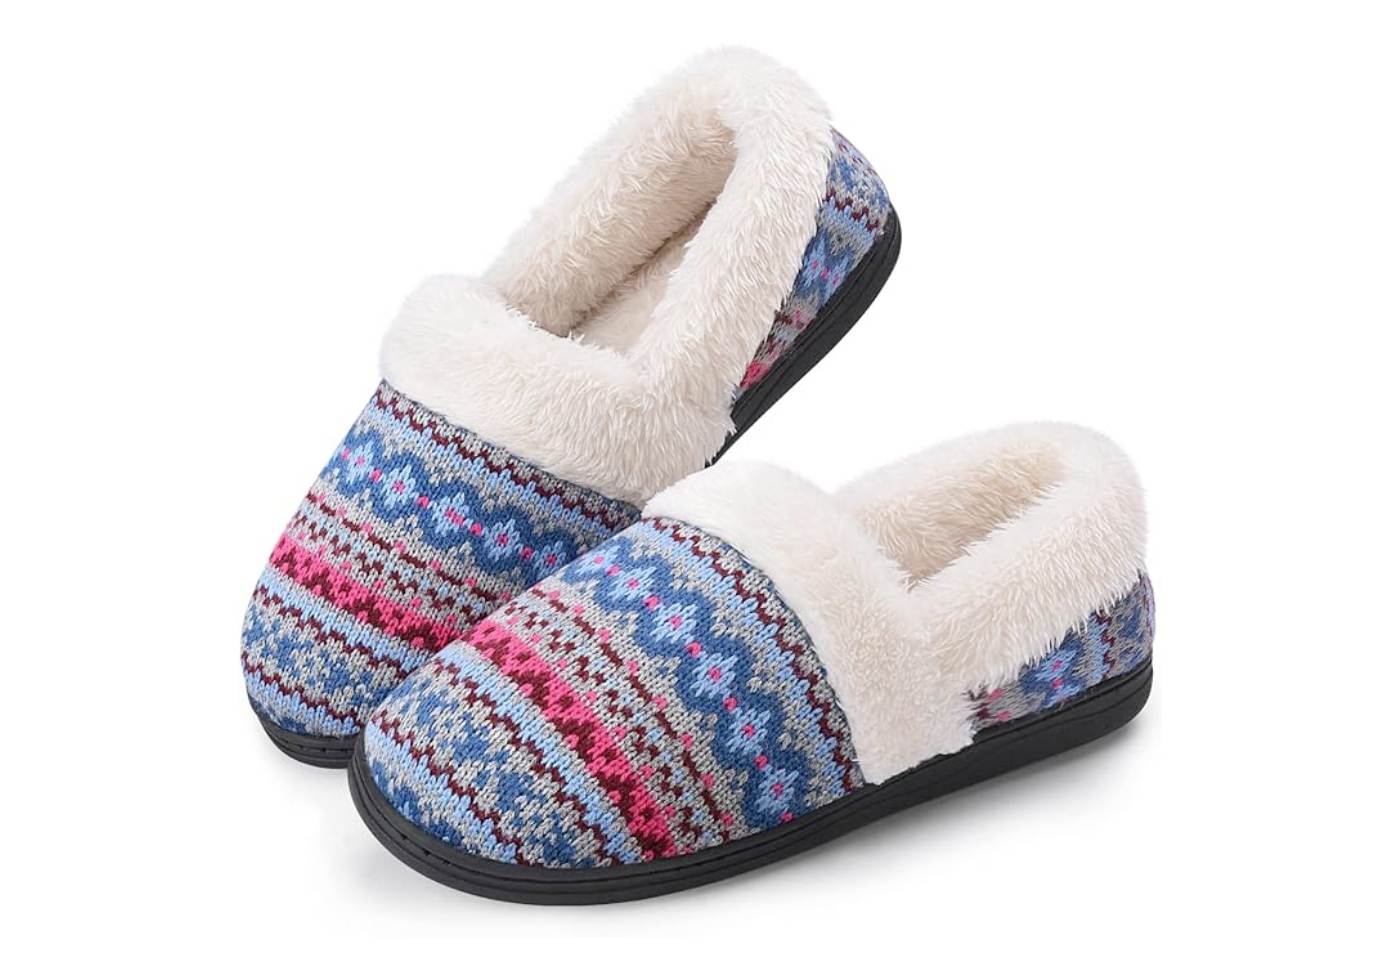 Get Set Globe Top 10 Best Comfy Slippers Like Shoes - Homitem Women's Slip-On Knit Slippers Memory Foam Slippers